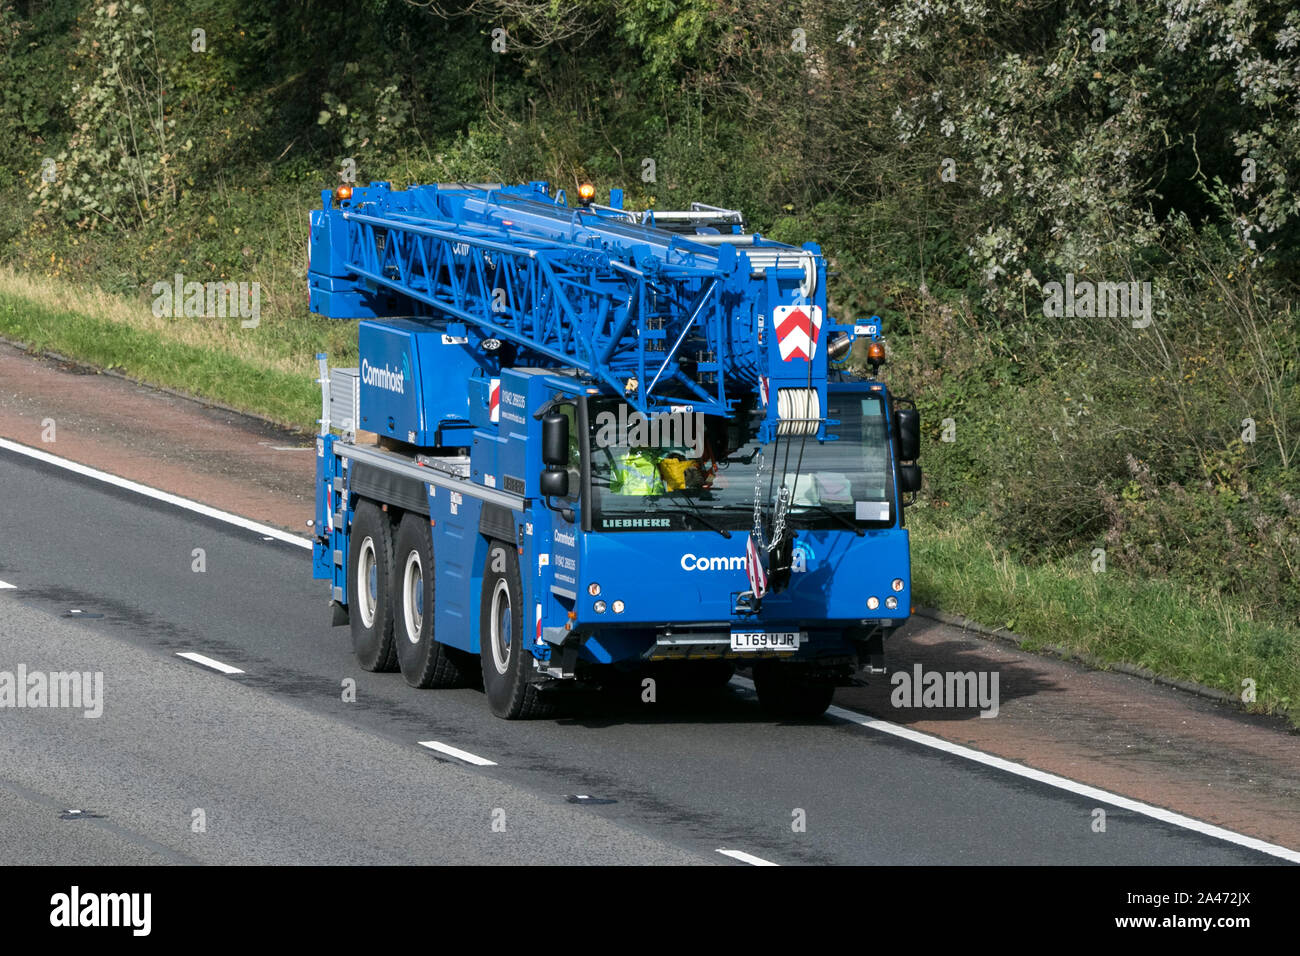 Commhoist telecoms Liebherr blue mobile crane traveling on the M61 motorway near Manchester, UK Liebherr-Werk Ehingen GmbH Stock Photo